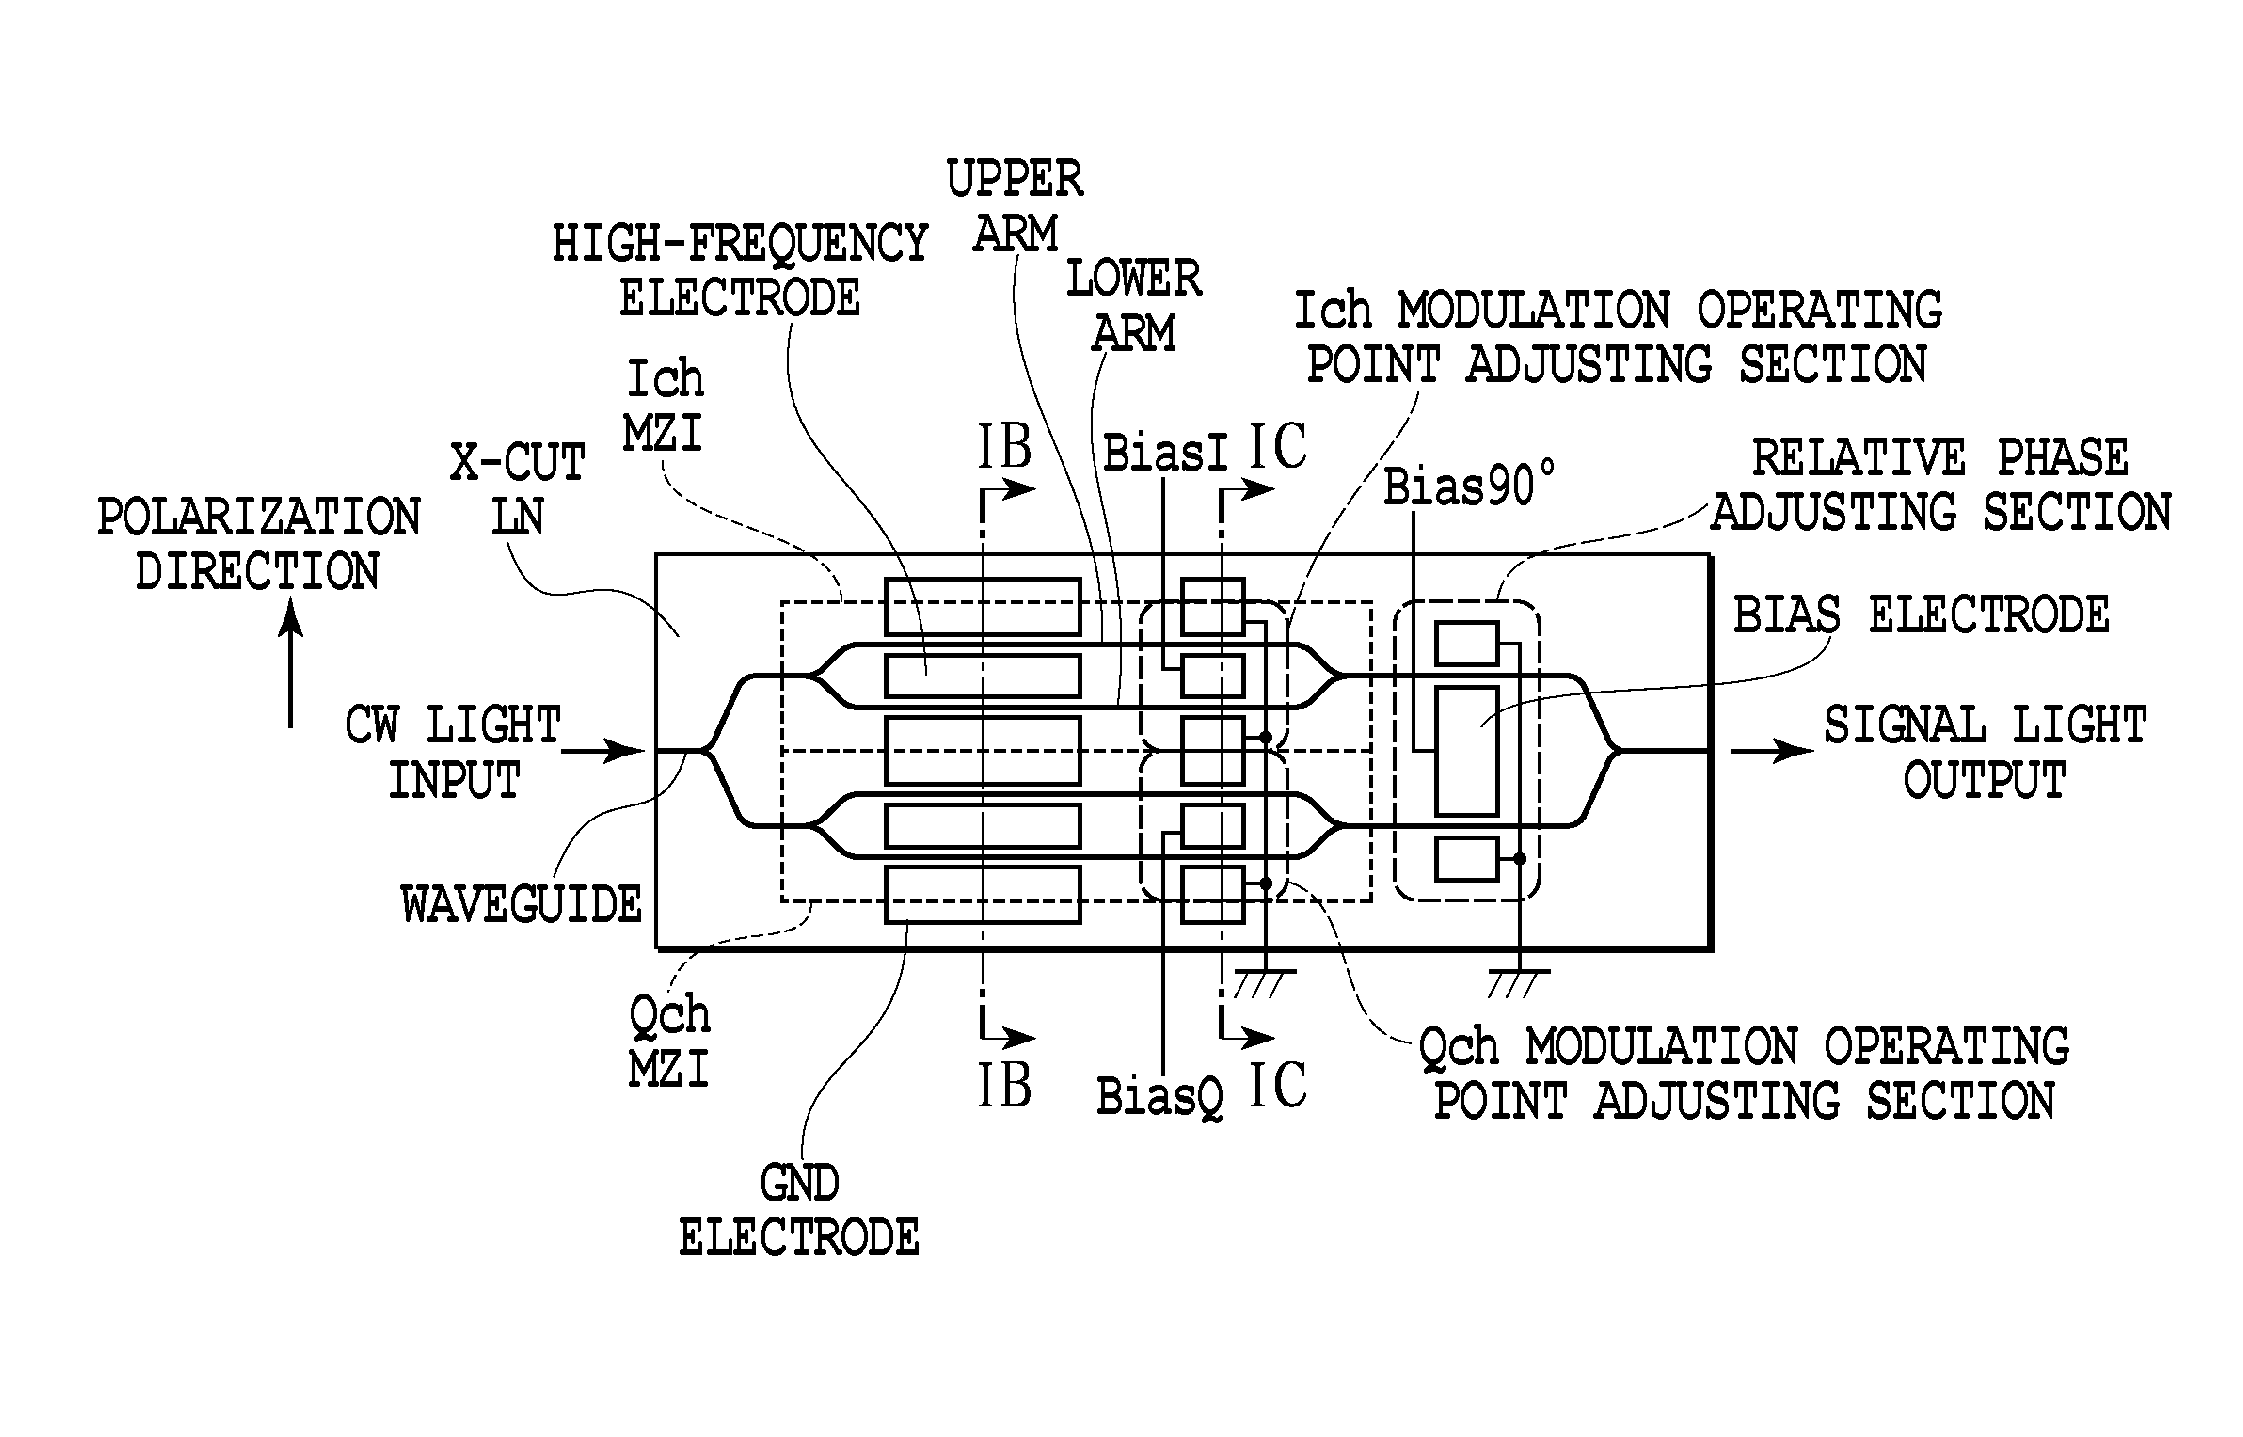 Optical modulator